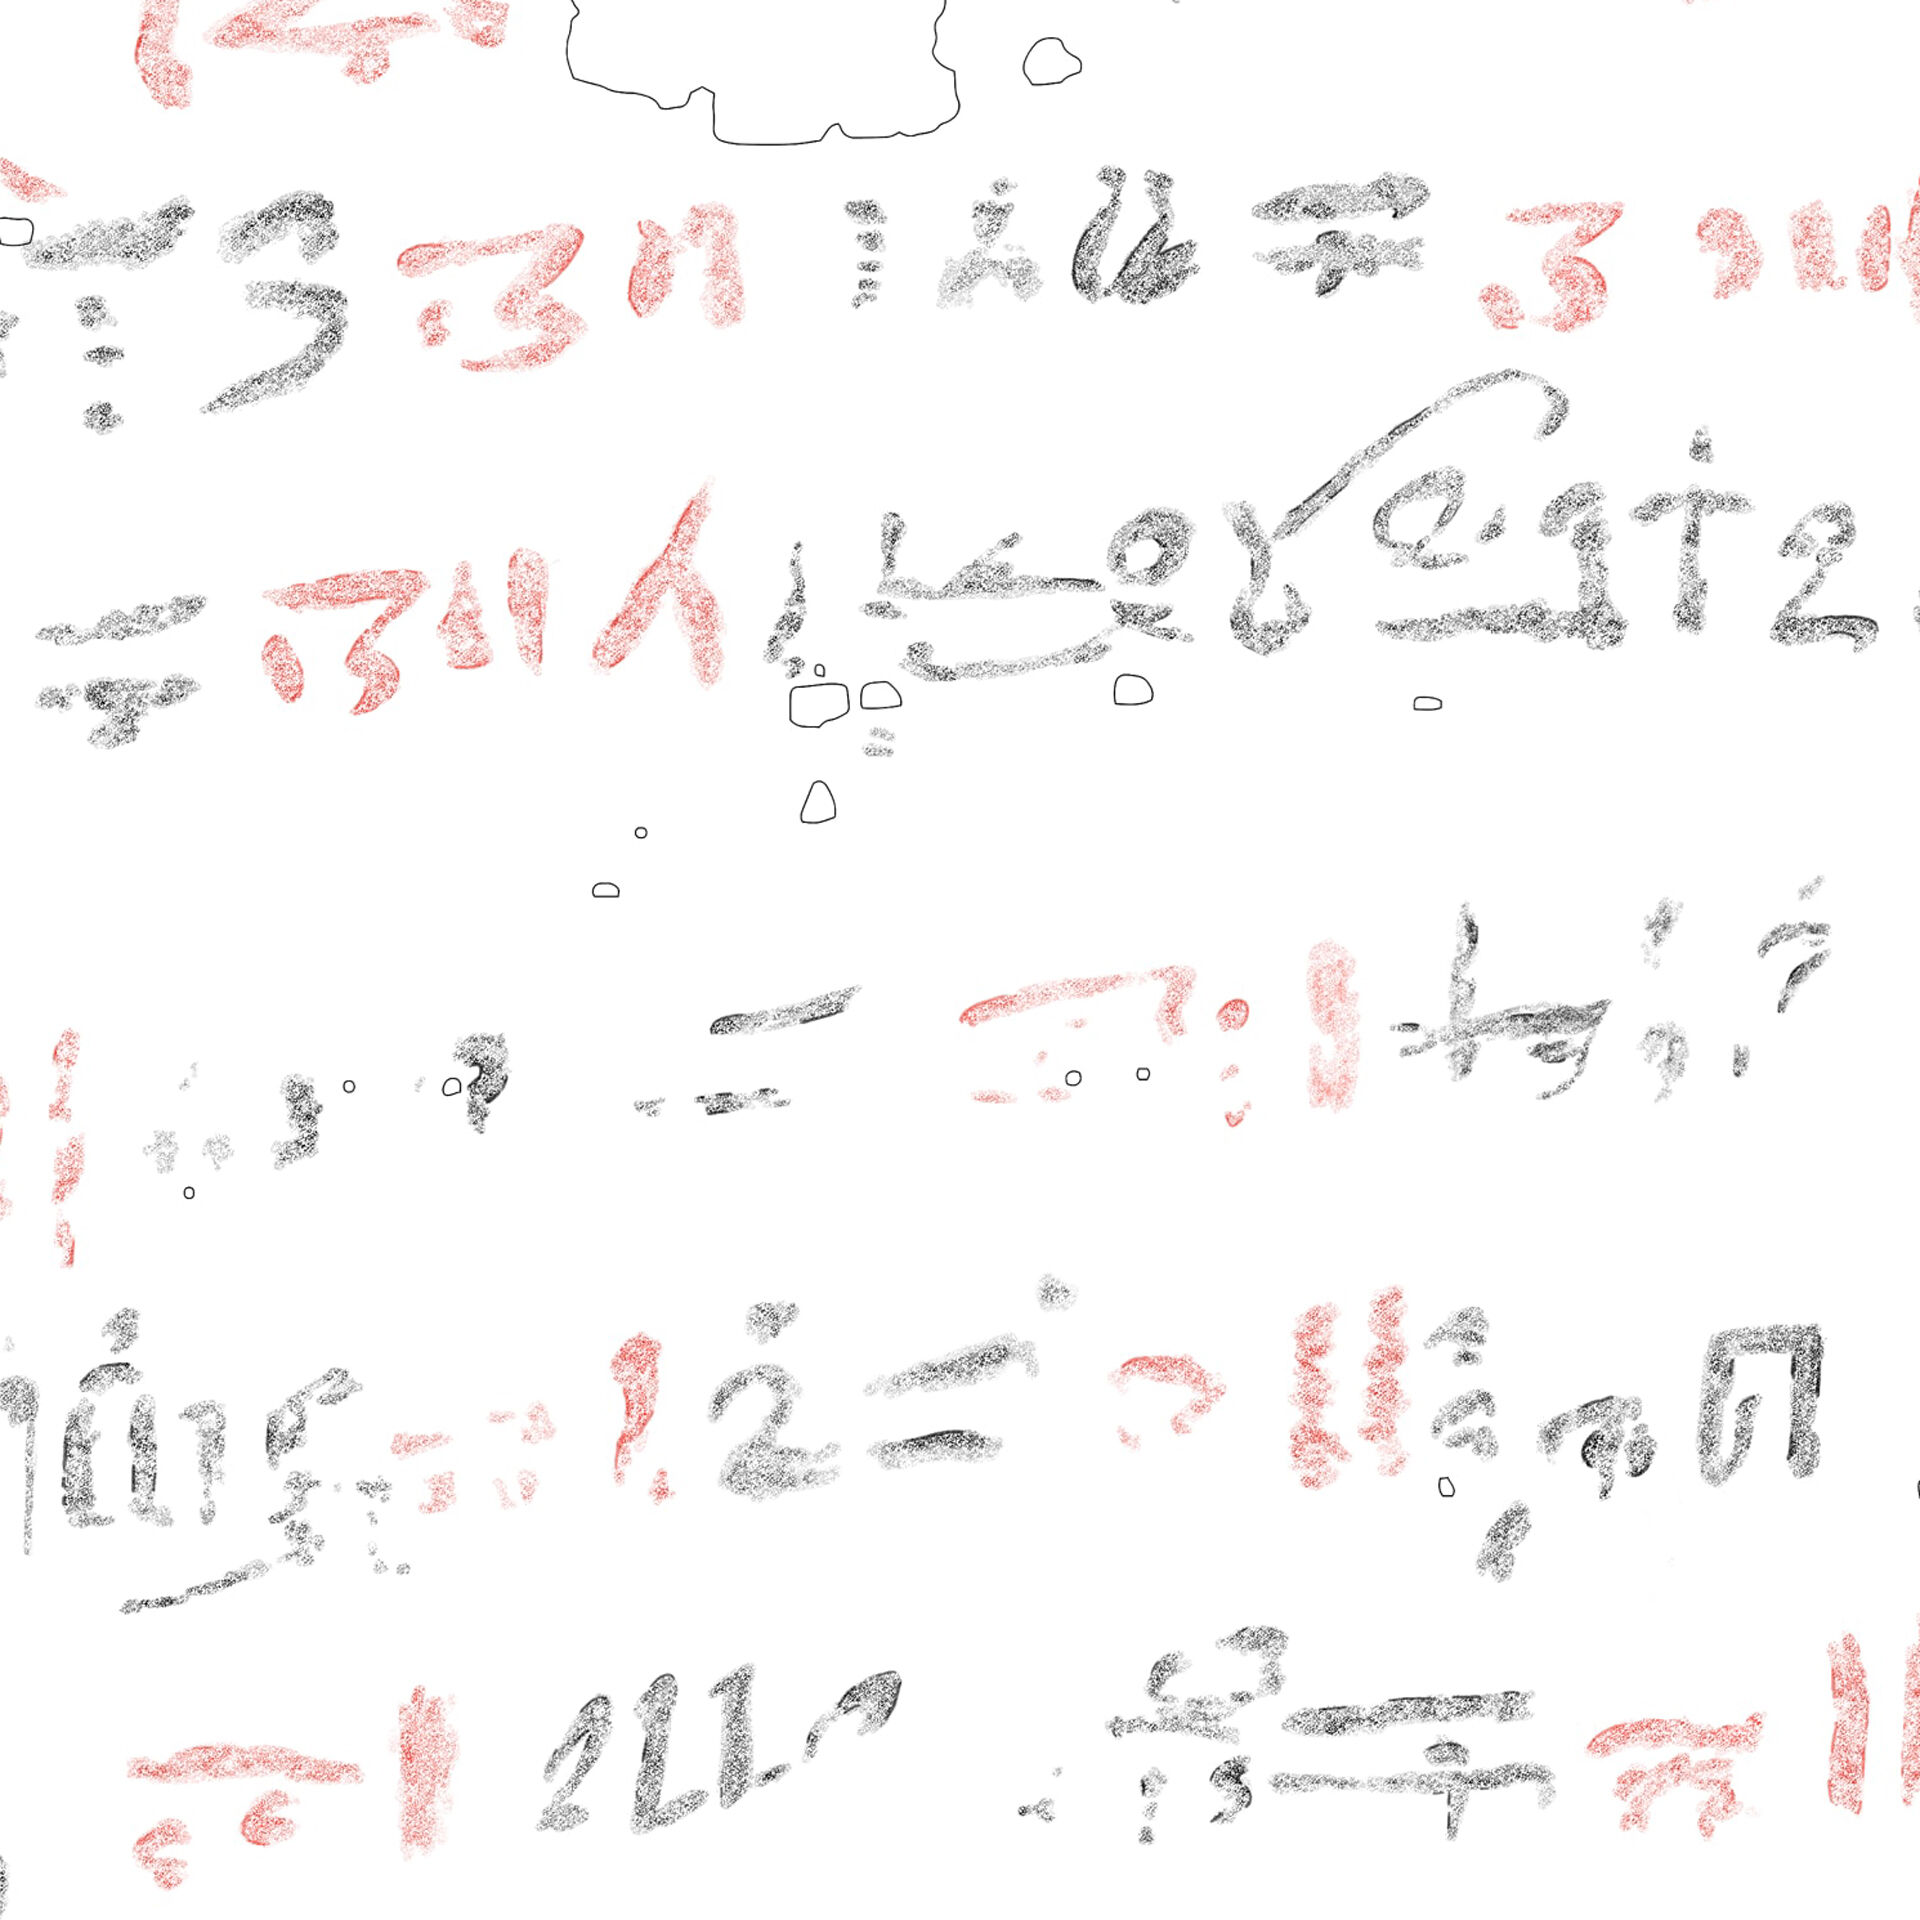 Deir el-Medina, Papyri, Recording erased texts